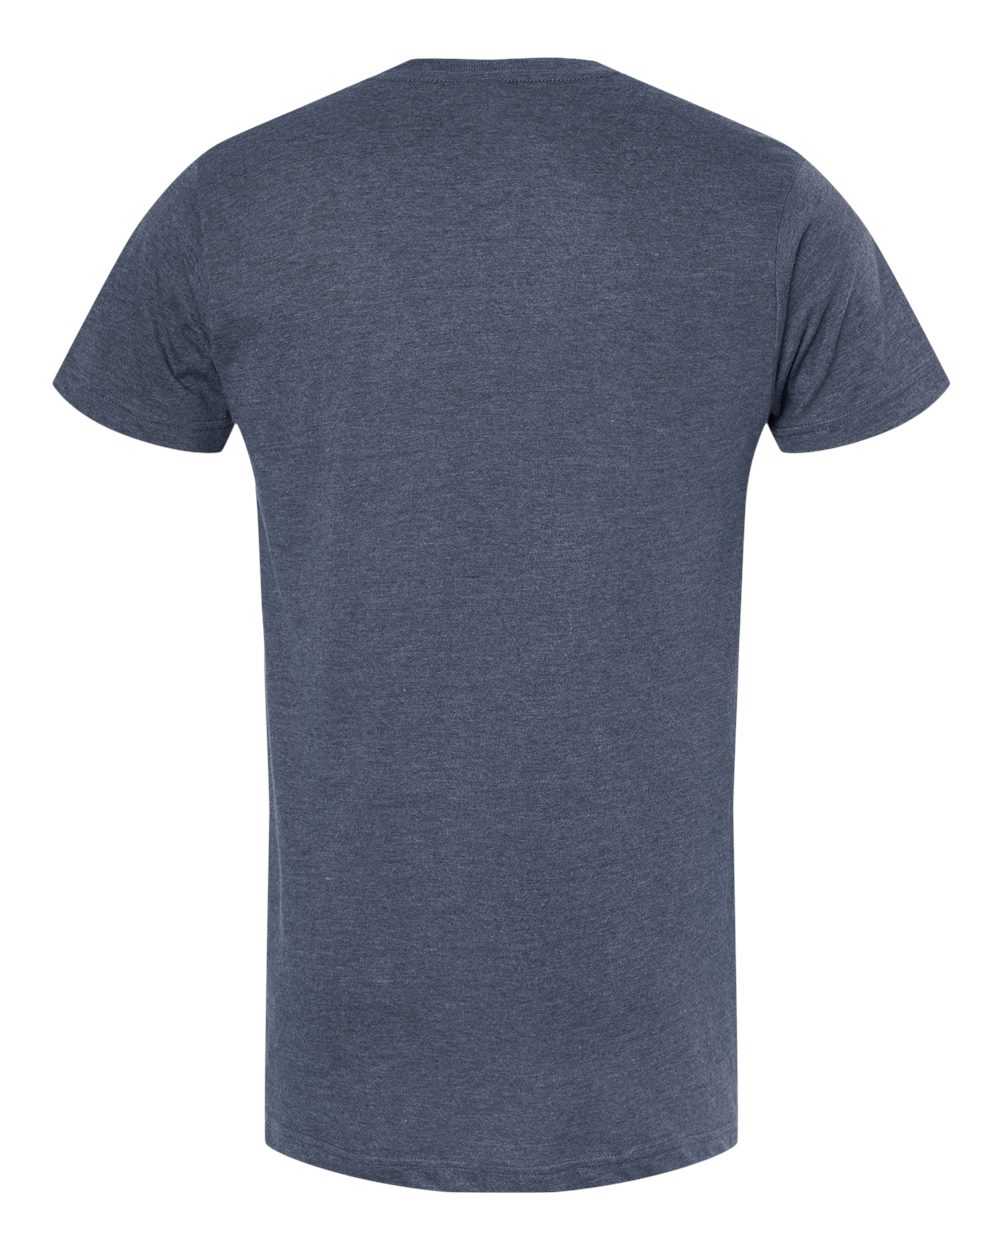 Unisex Cotton T-Shirt - Heather Navy